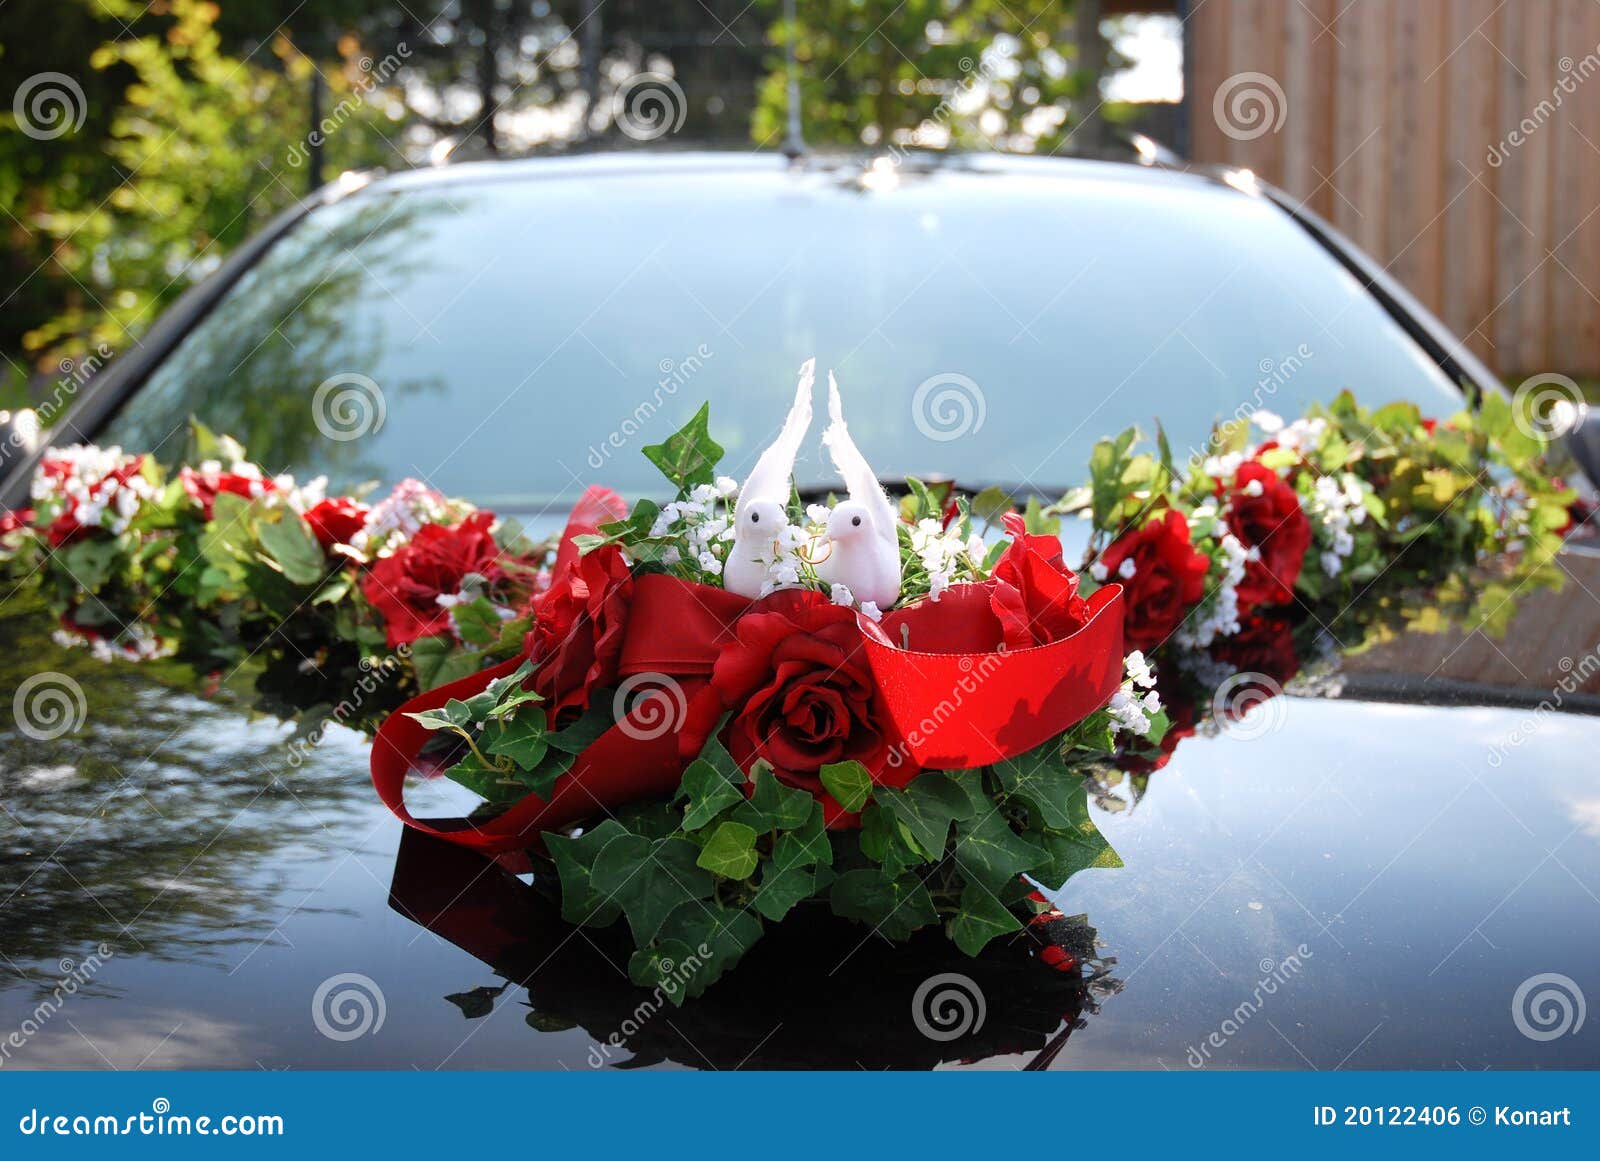 Wedding Car Decoration of Two White Doves Stock Photo - Image of ...